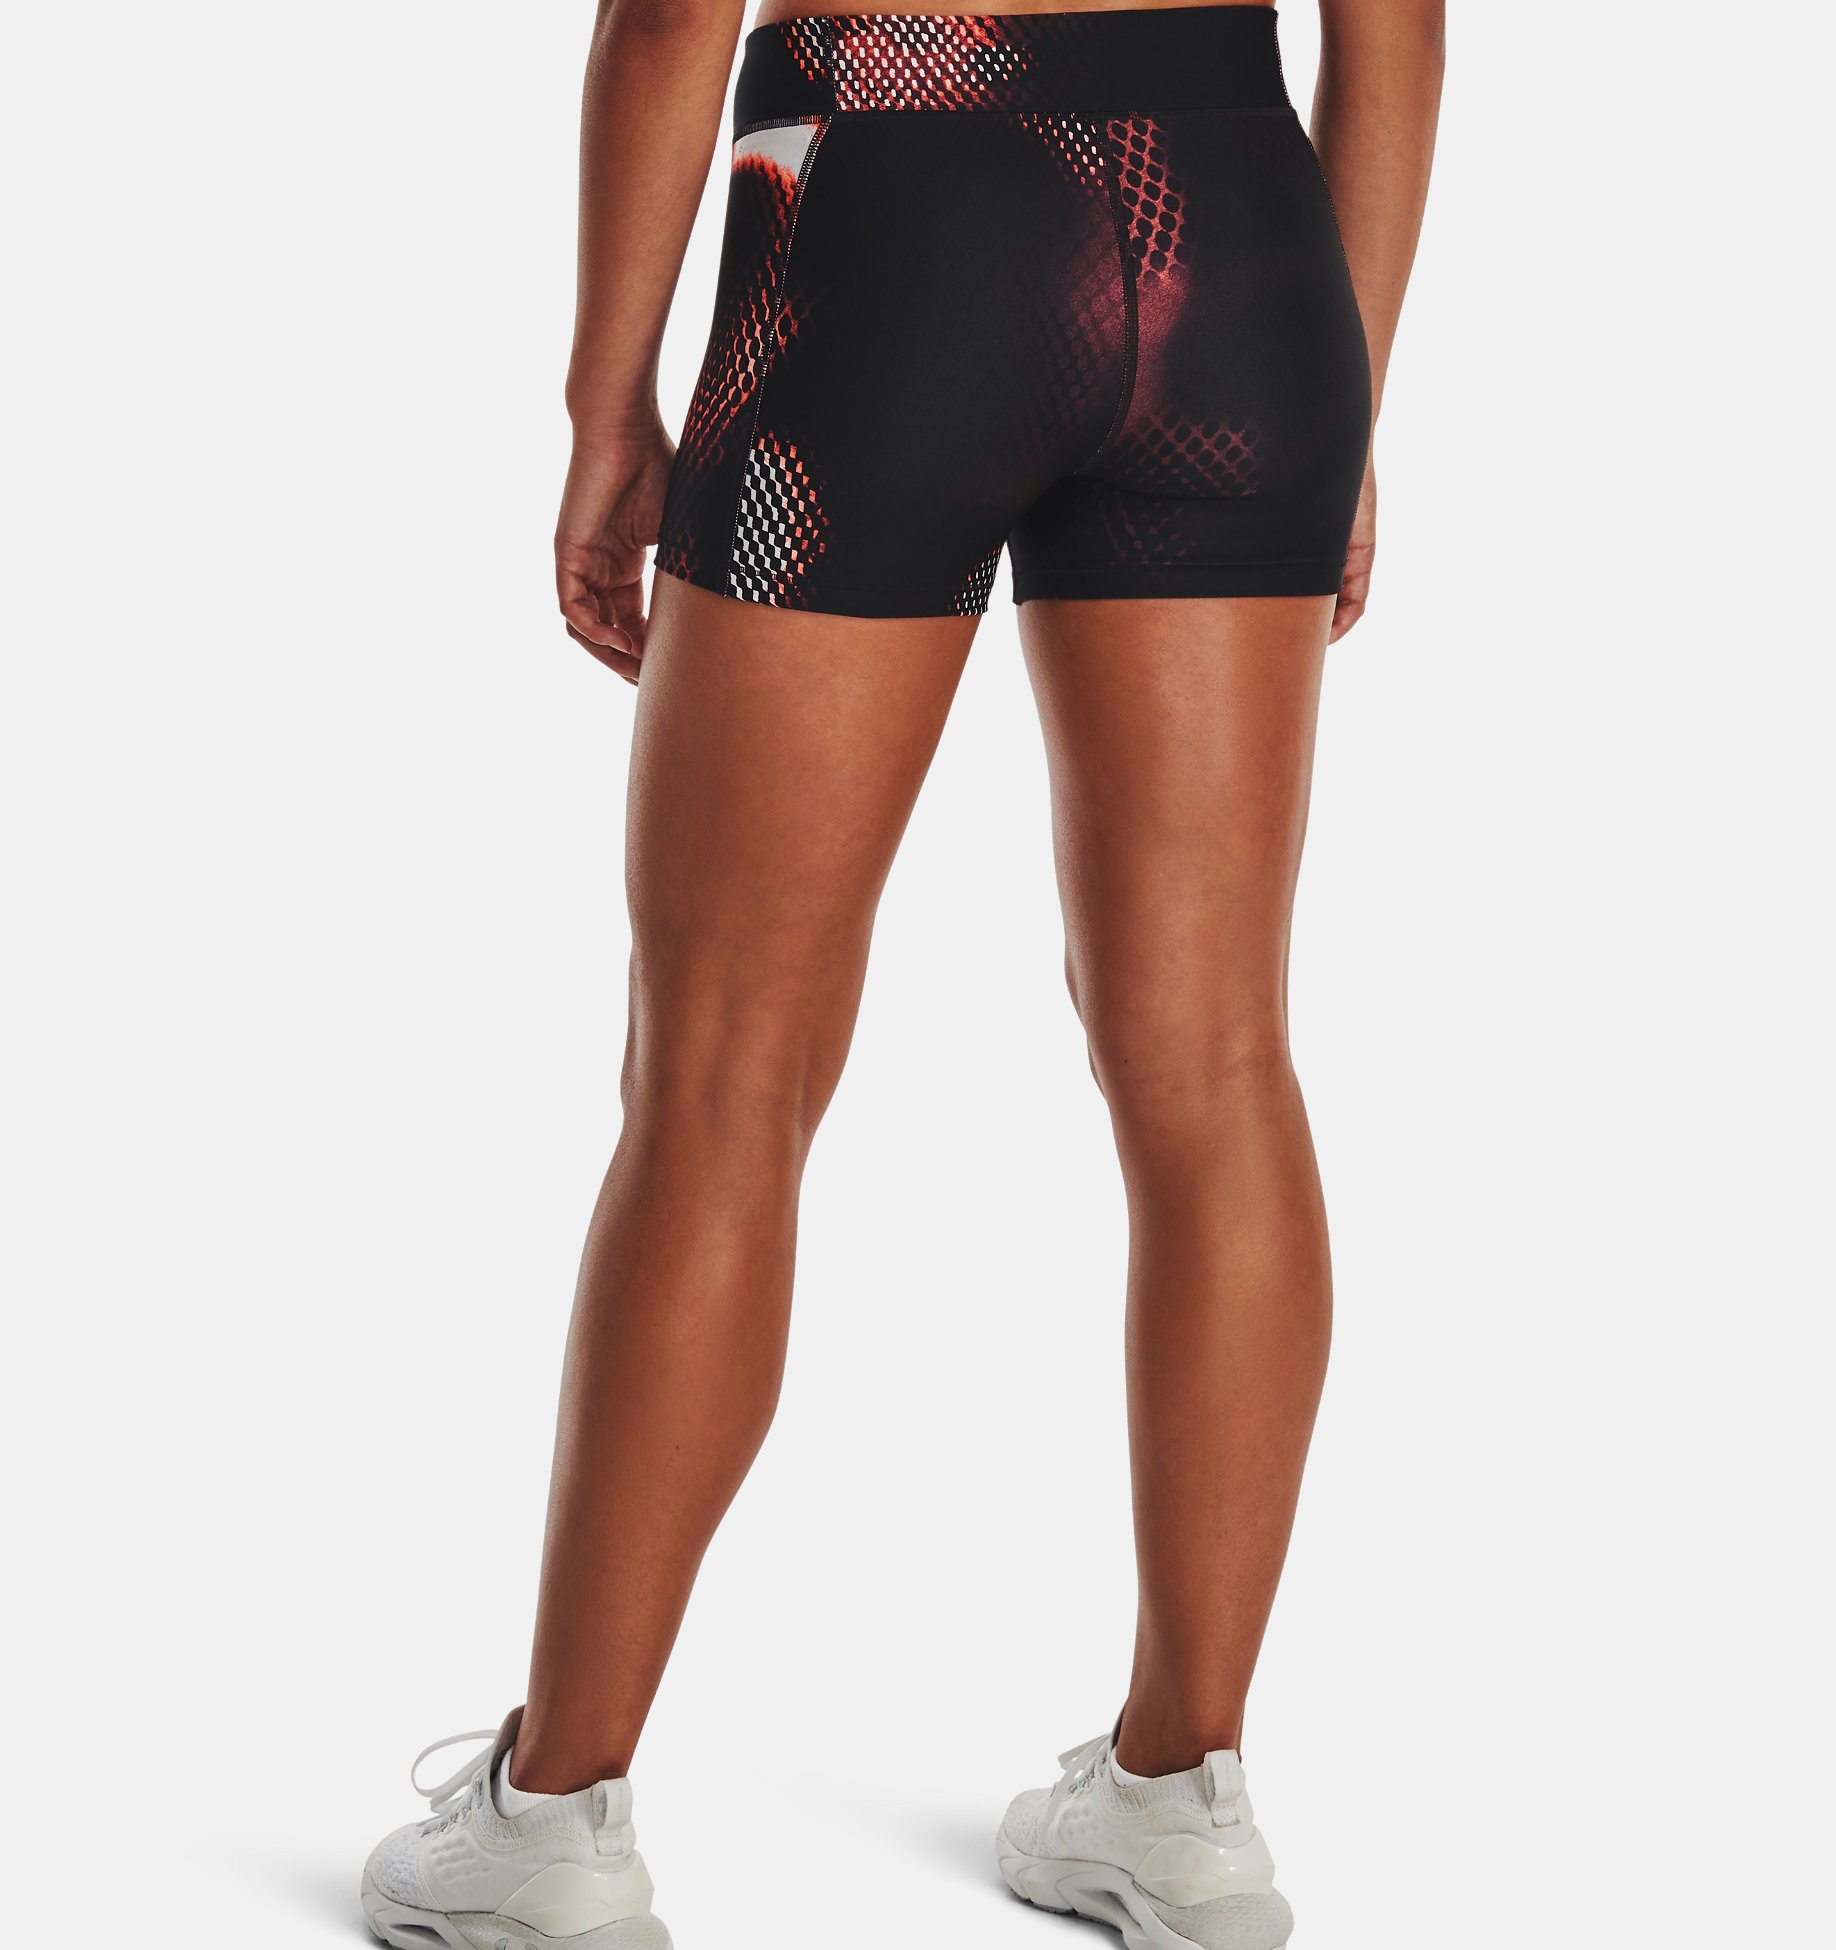 New Under Armour UA Women's HeatGear Armour Shorty Shorts 